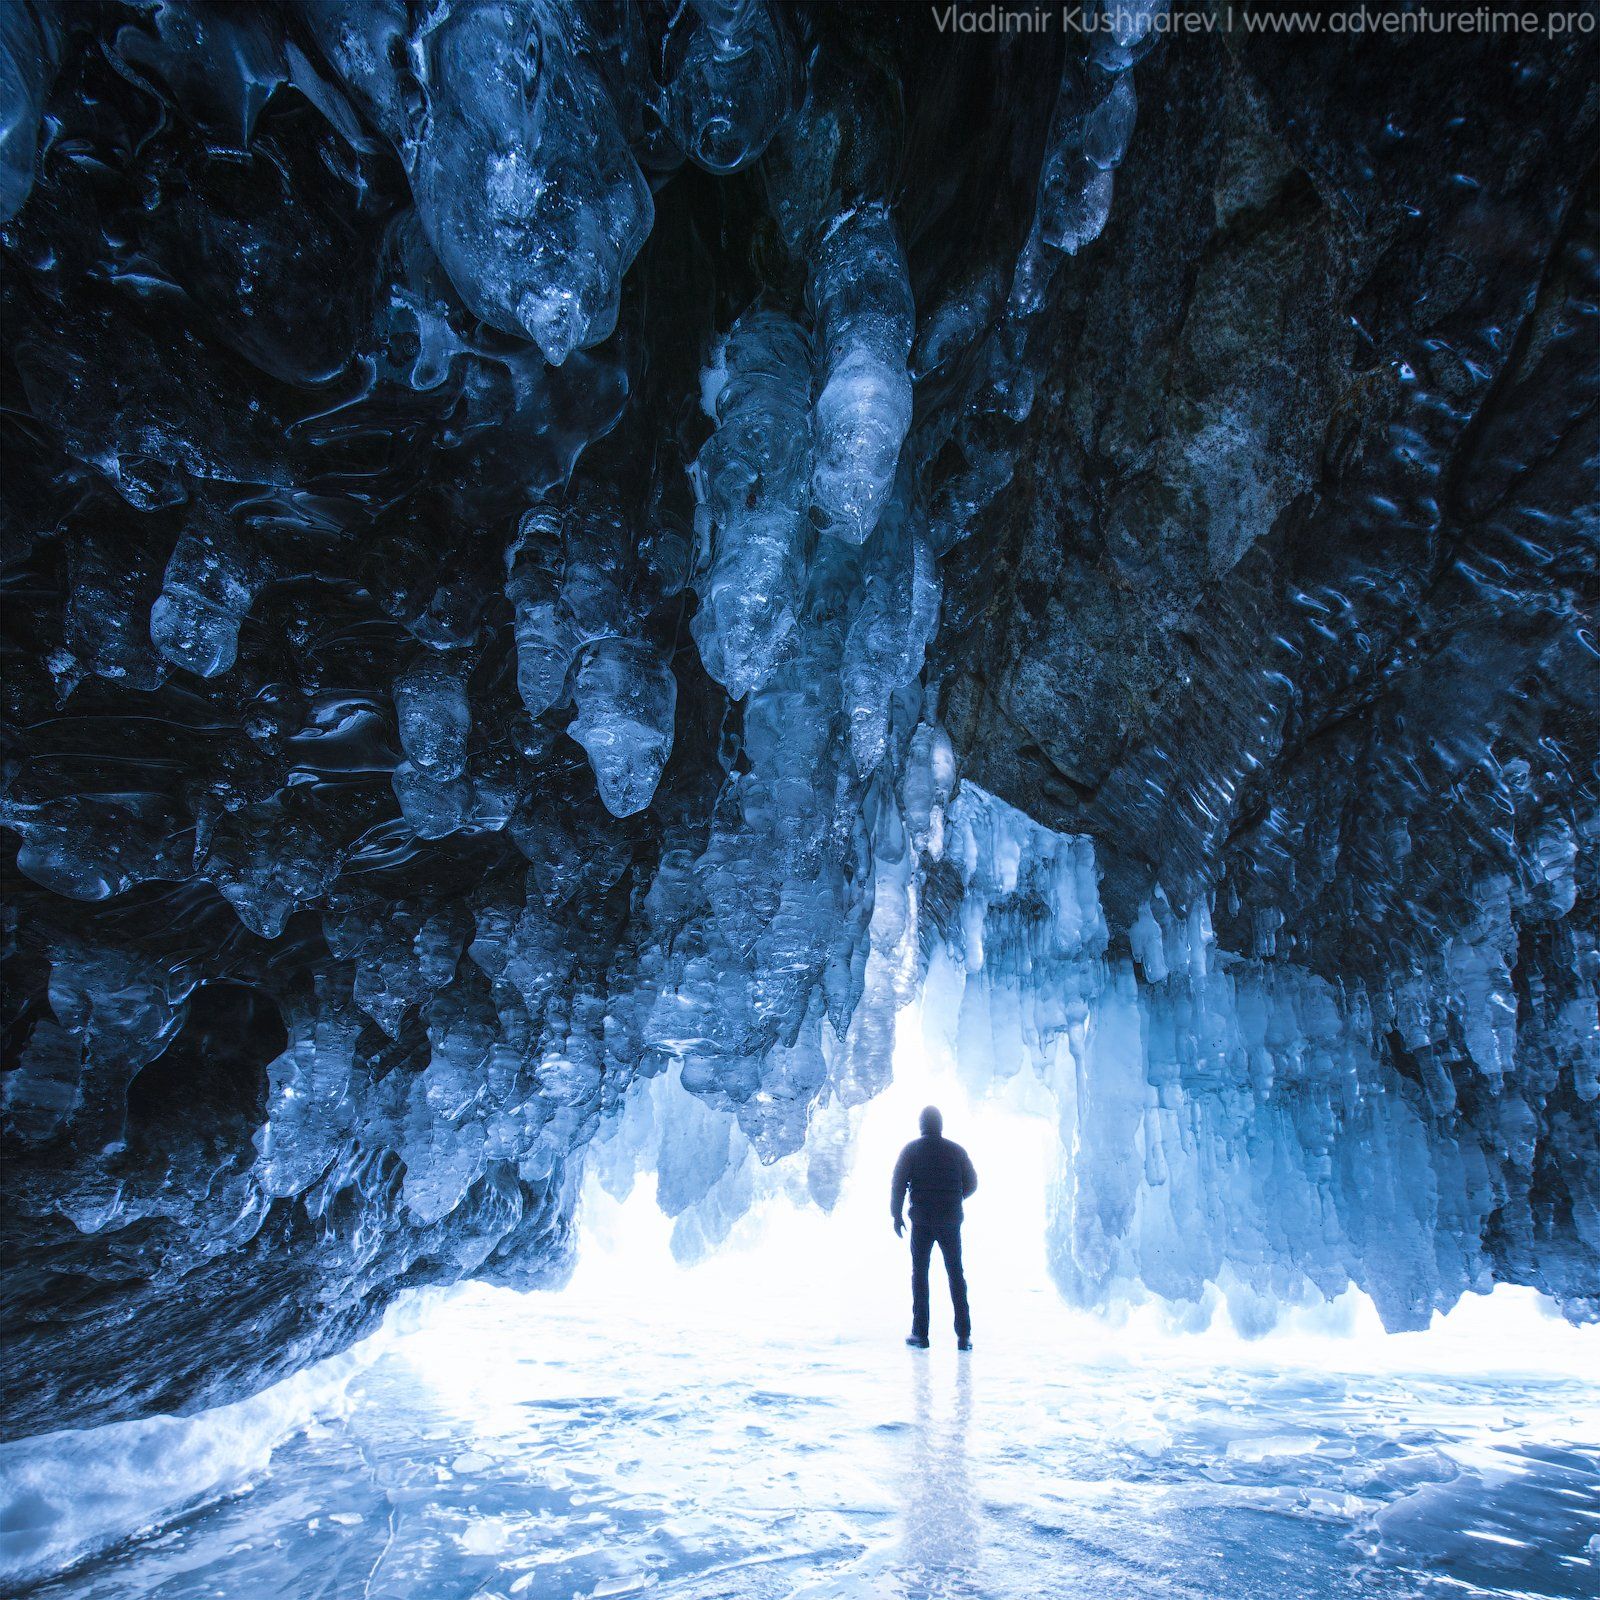 байкал, пещеры, ледяные пещеры, Vladimir Kushnarev